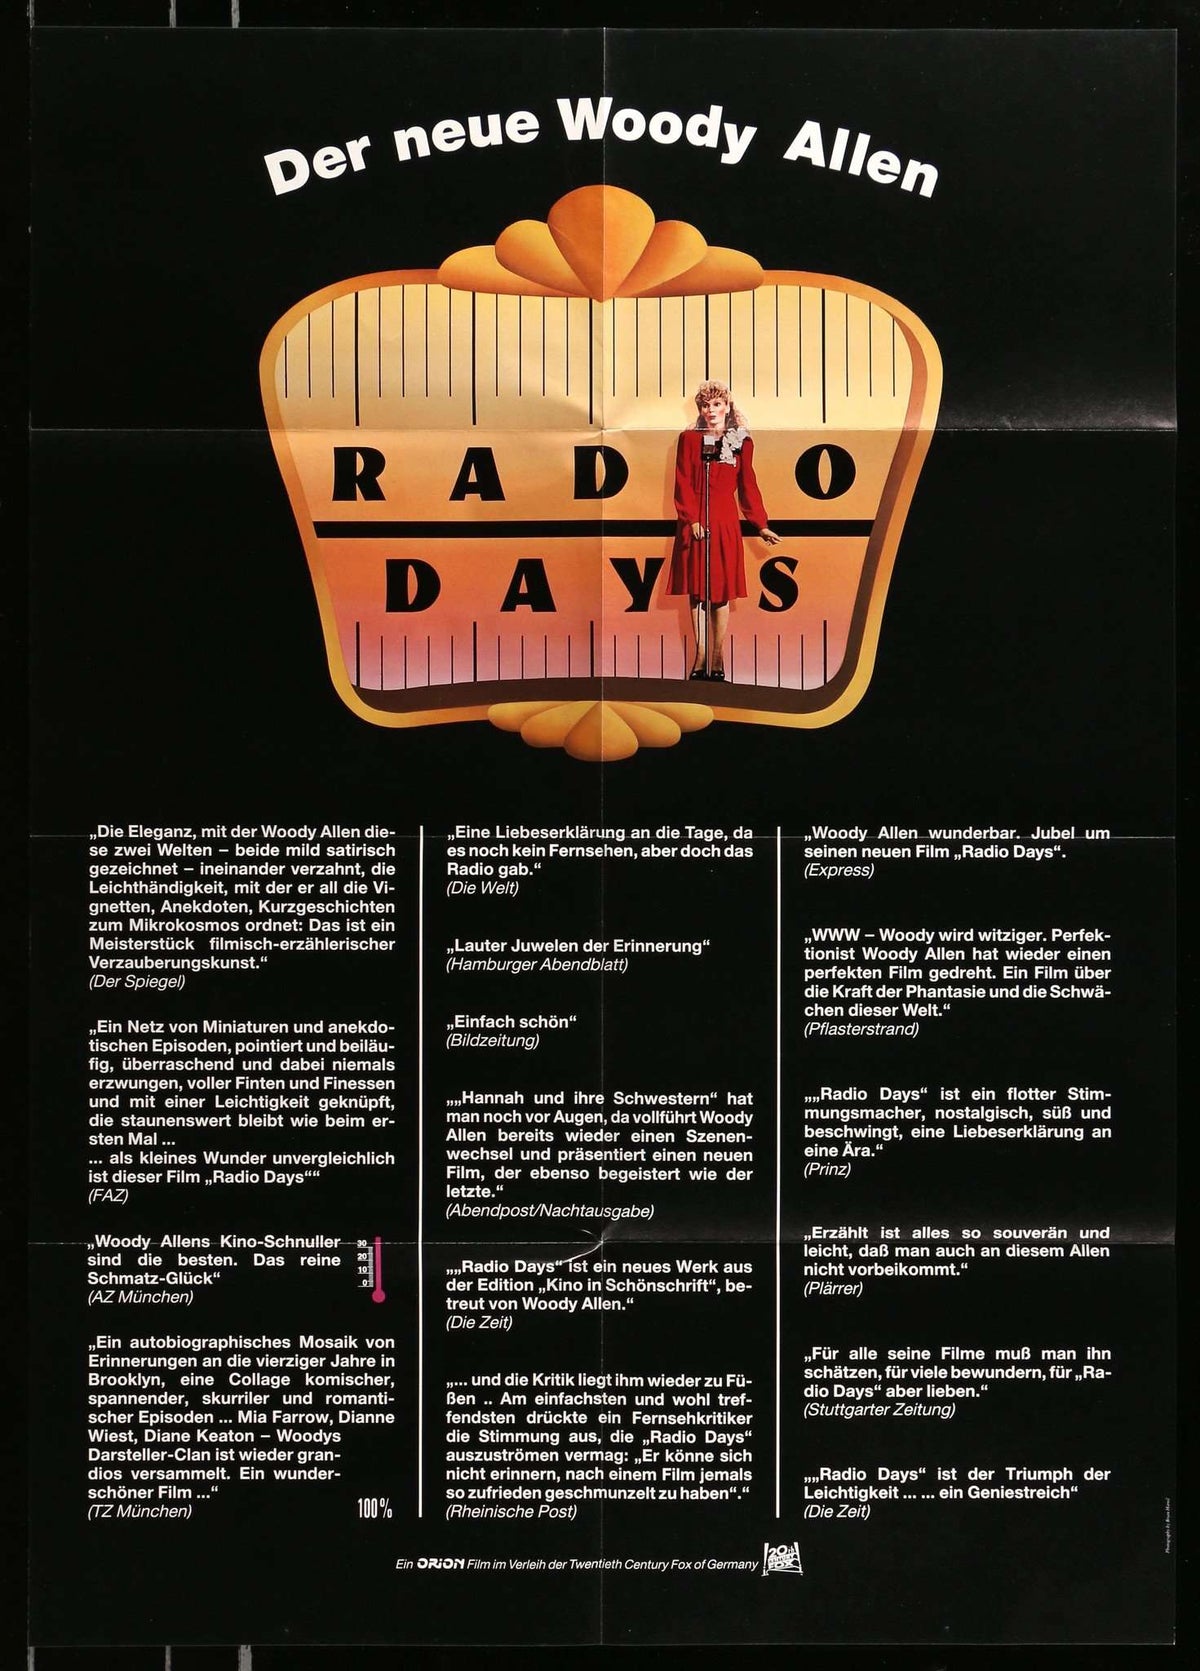 Radio Days (1987) Póster de película alemana vintage en Original Film Art -  Original Film Art - Vintage Movie Posters